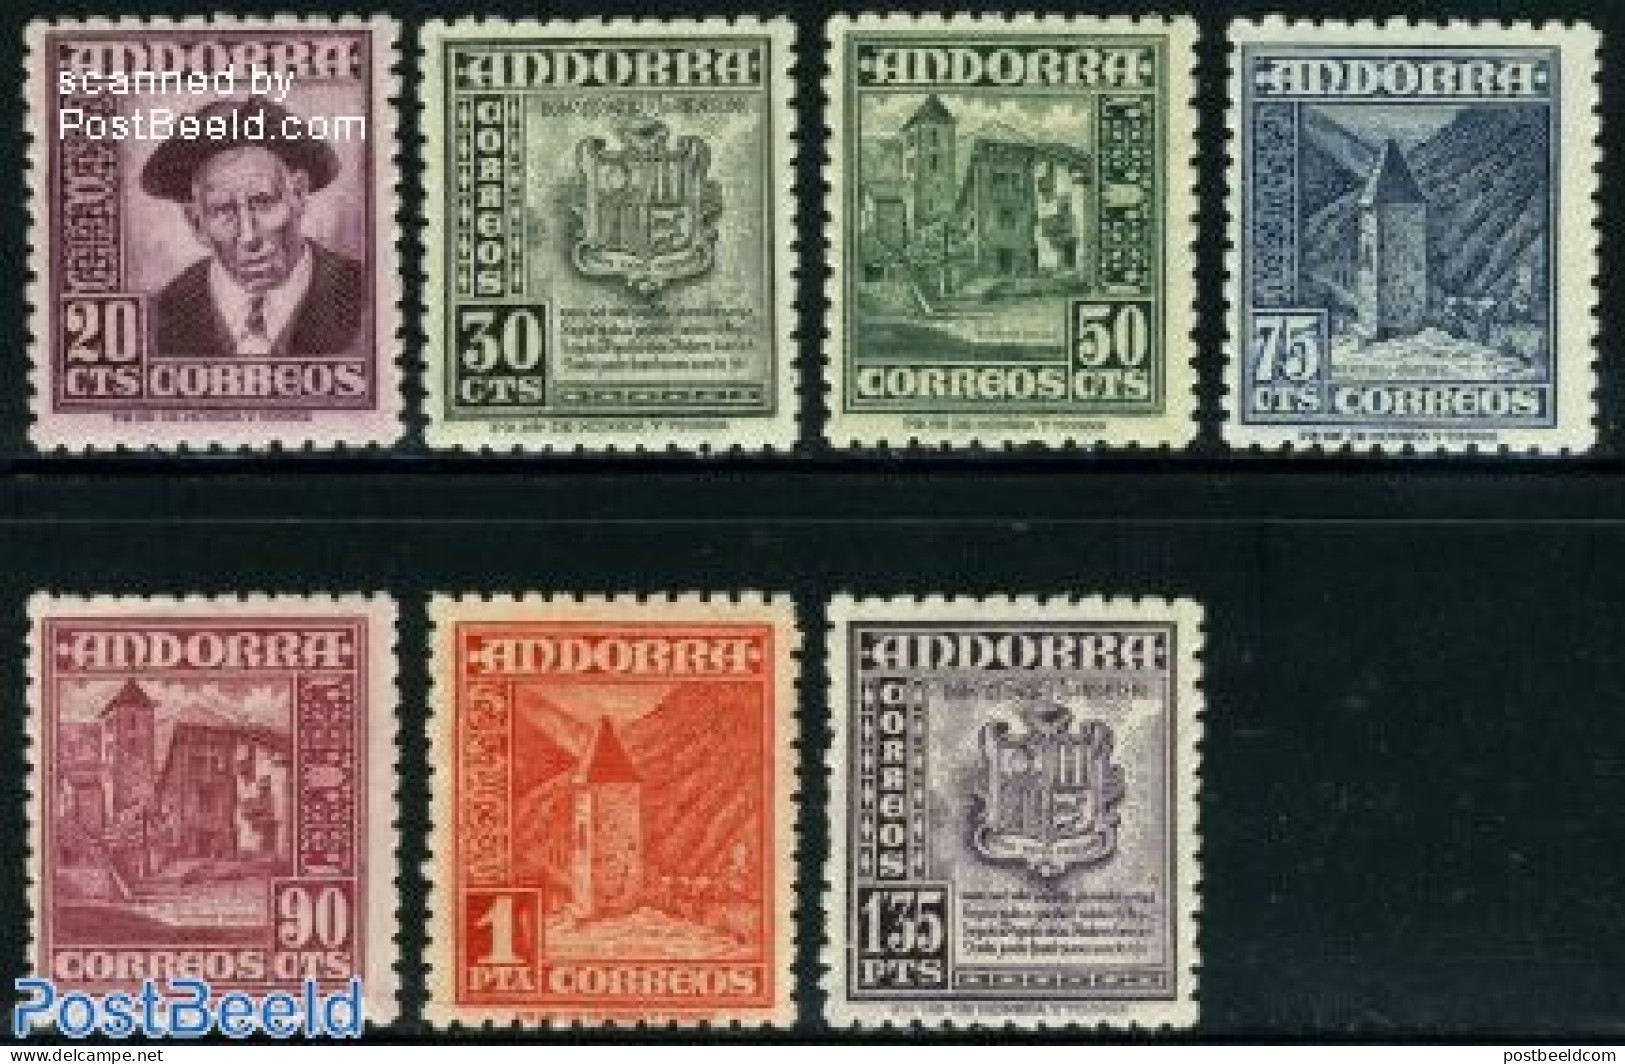 Andorra, Spanish Post 1948 Definitives, National Symbols 7v, Unused (hinged), History - Religion - Coat Of Arms - Chur.. - Ungebraucht